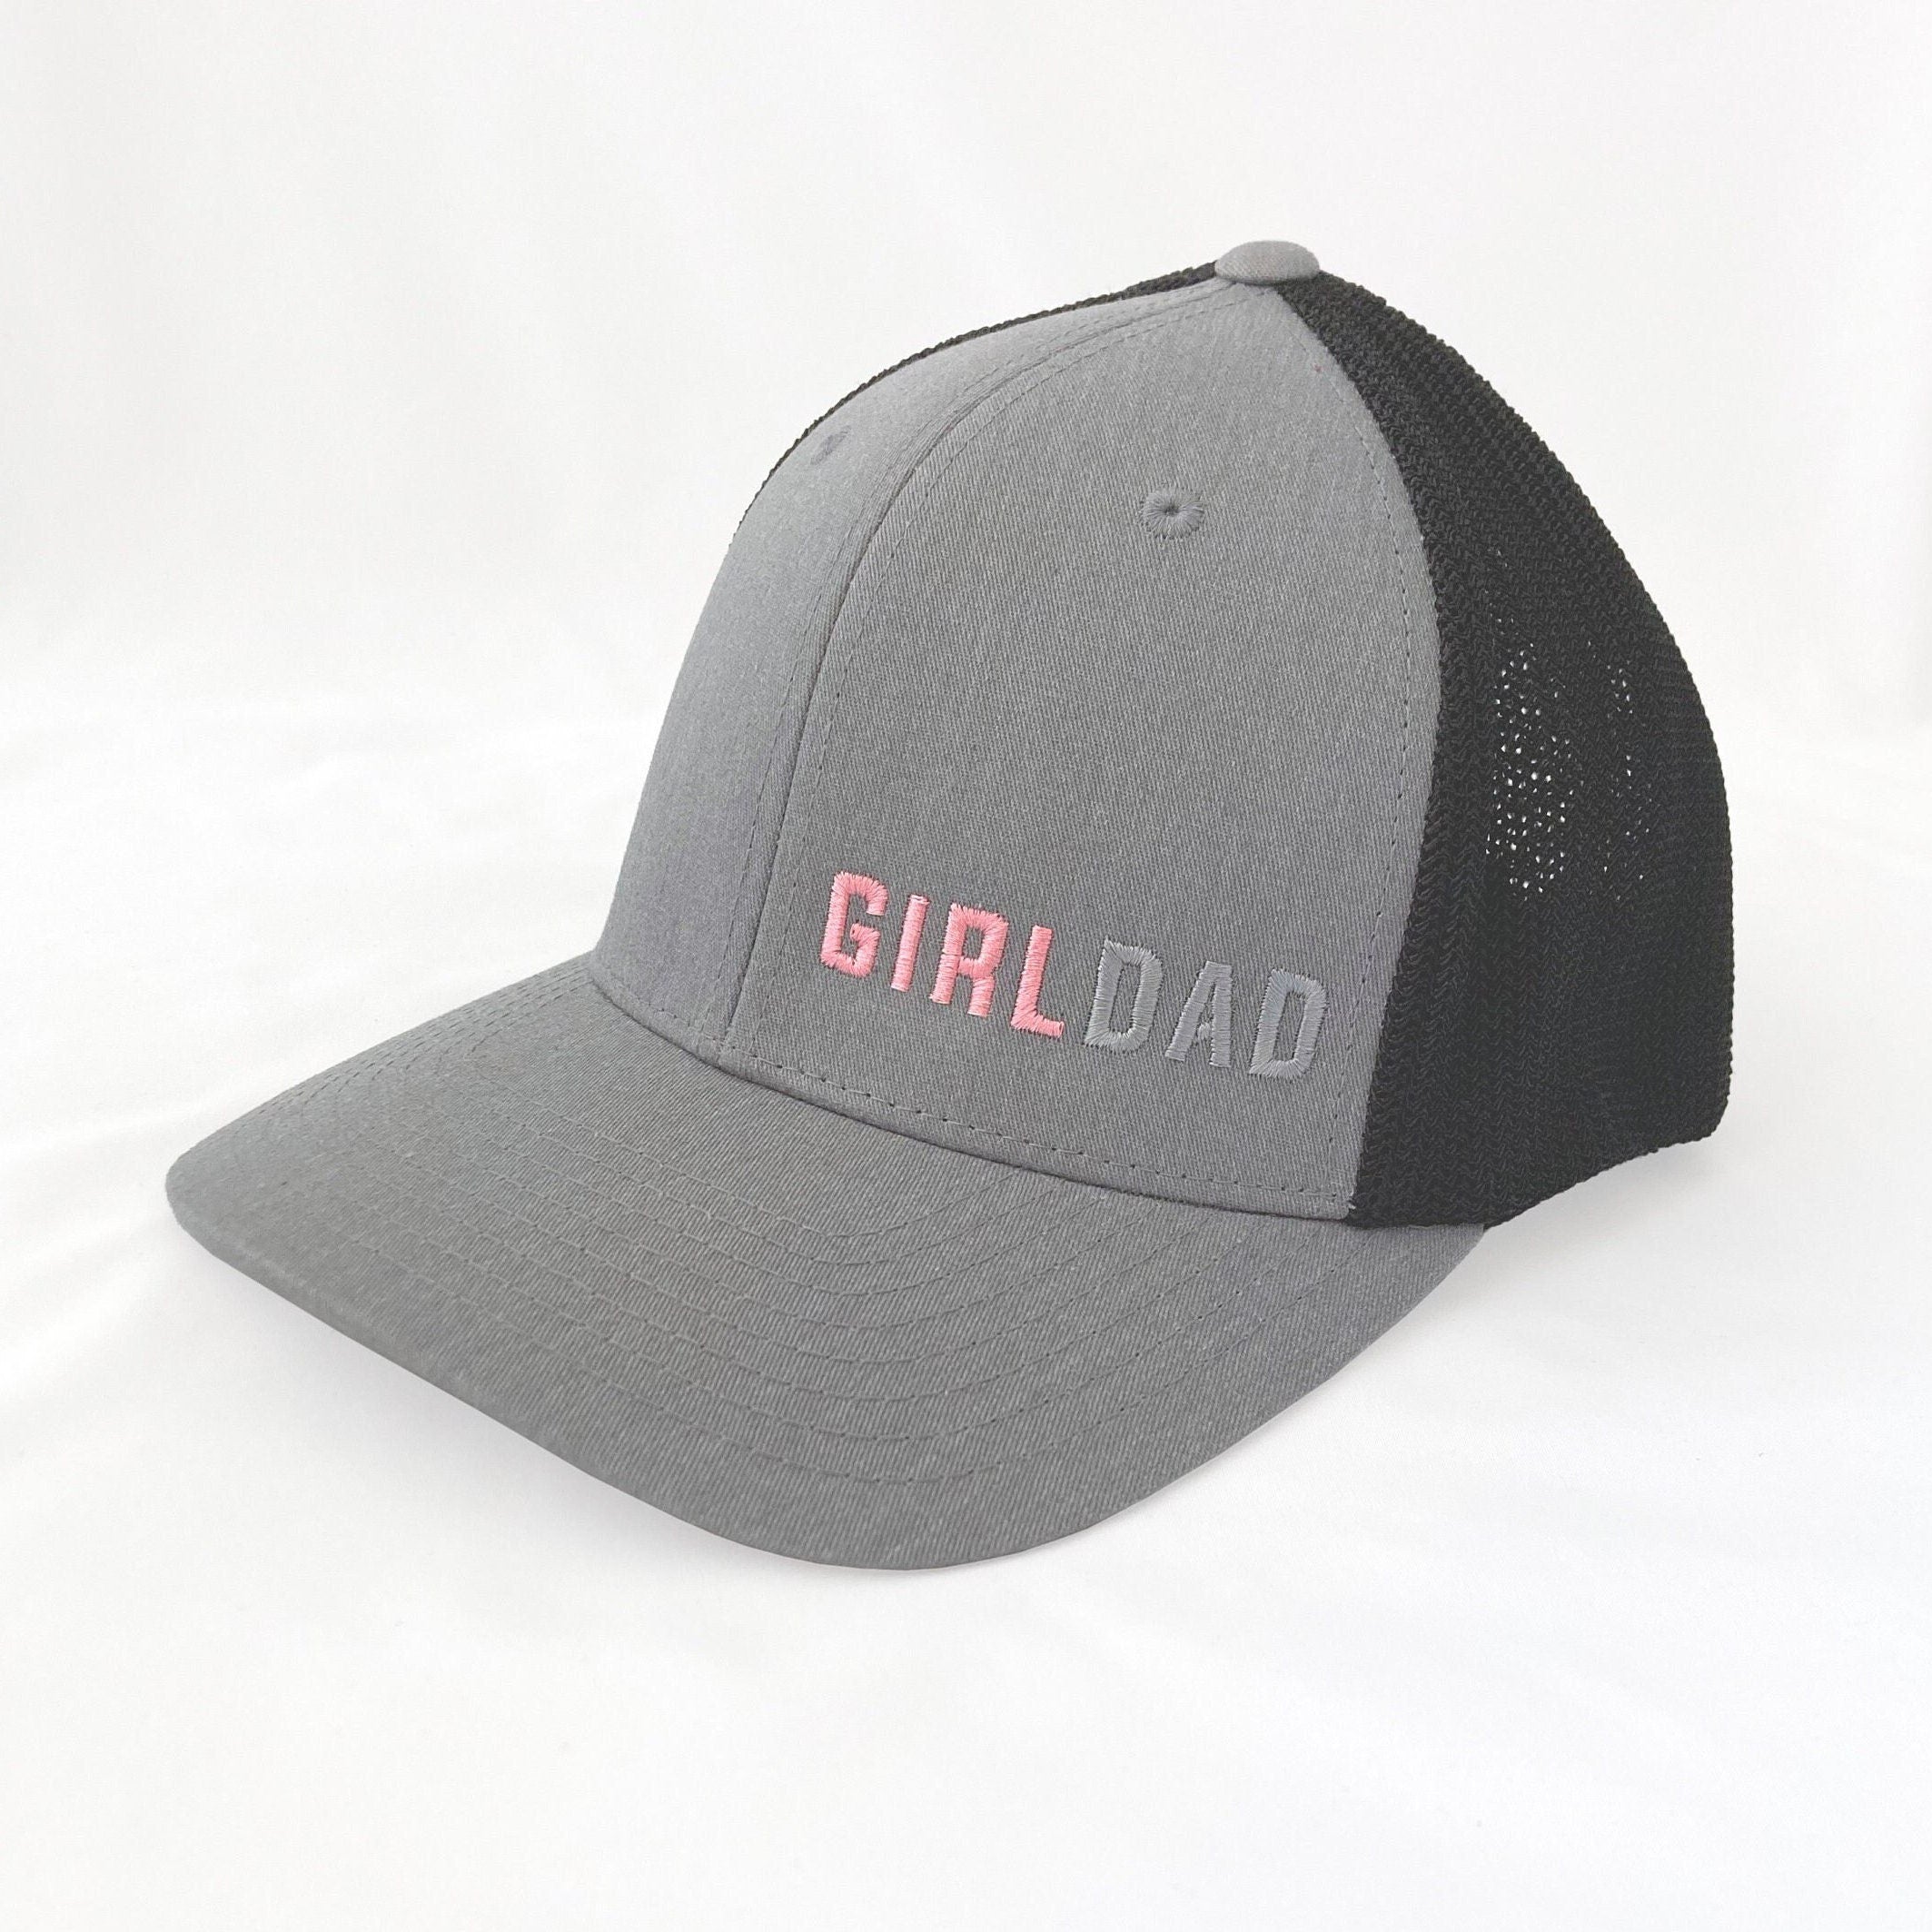 Girldad® Heather Grey/Black with Pink/Silver Offset Logo Mesh Back Embroidered FlexFit Cap